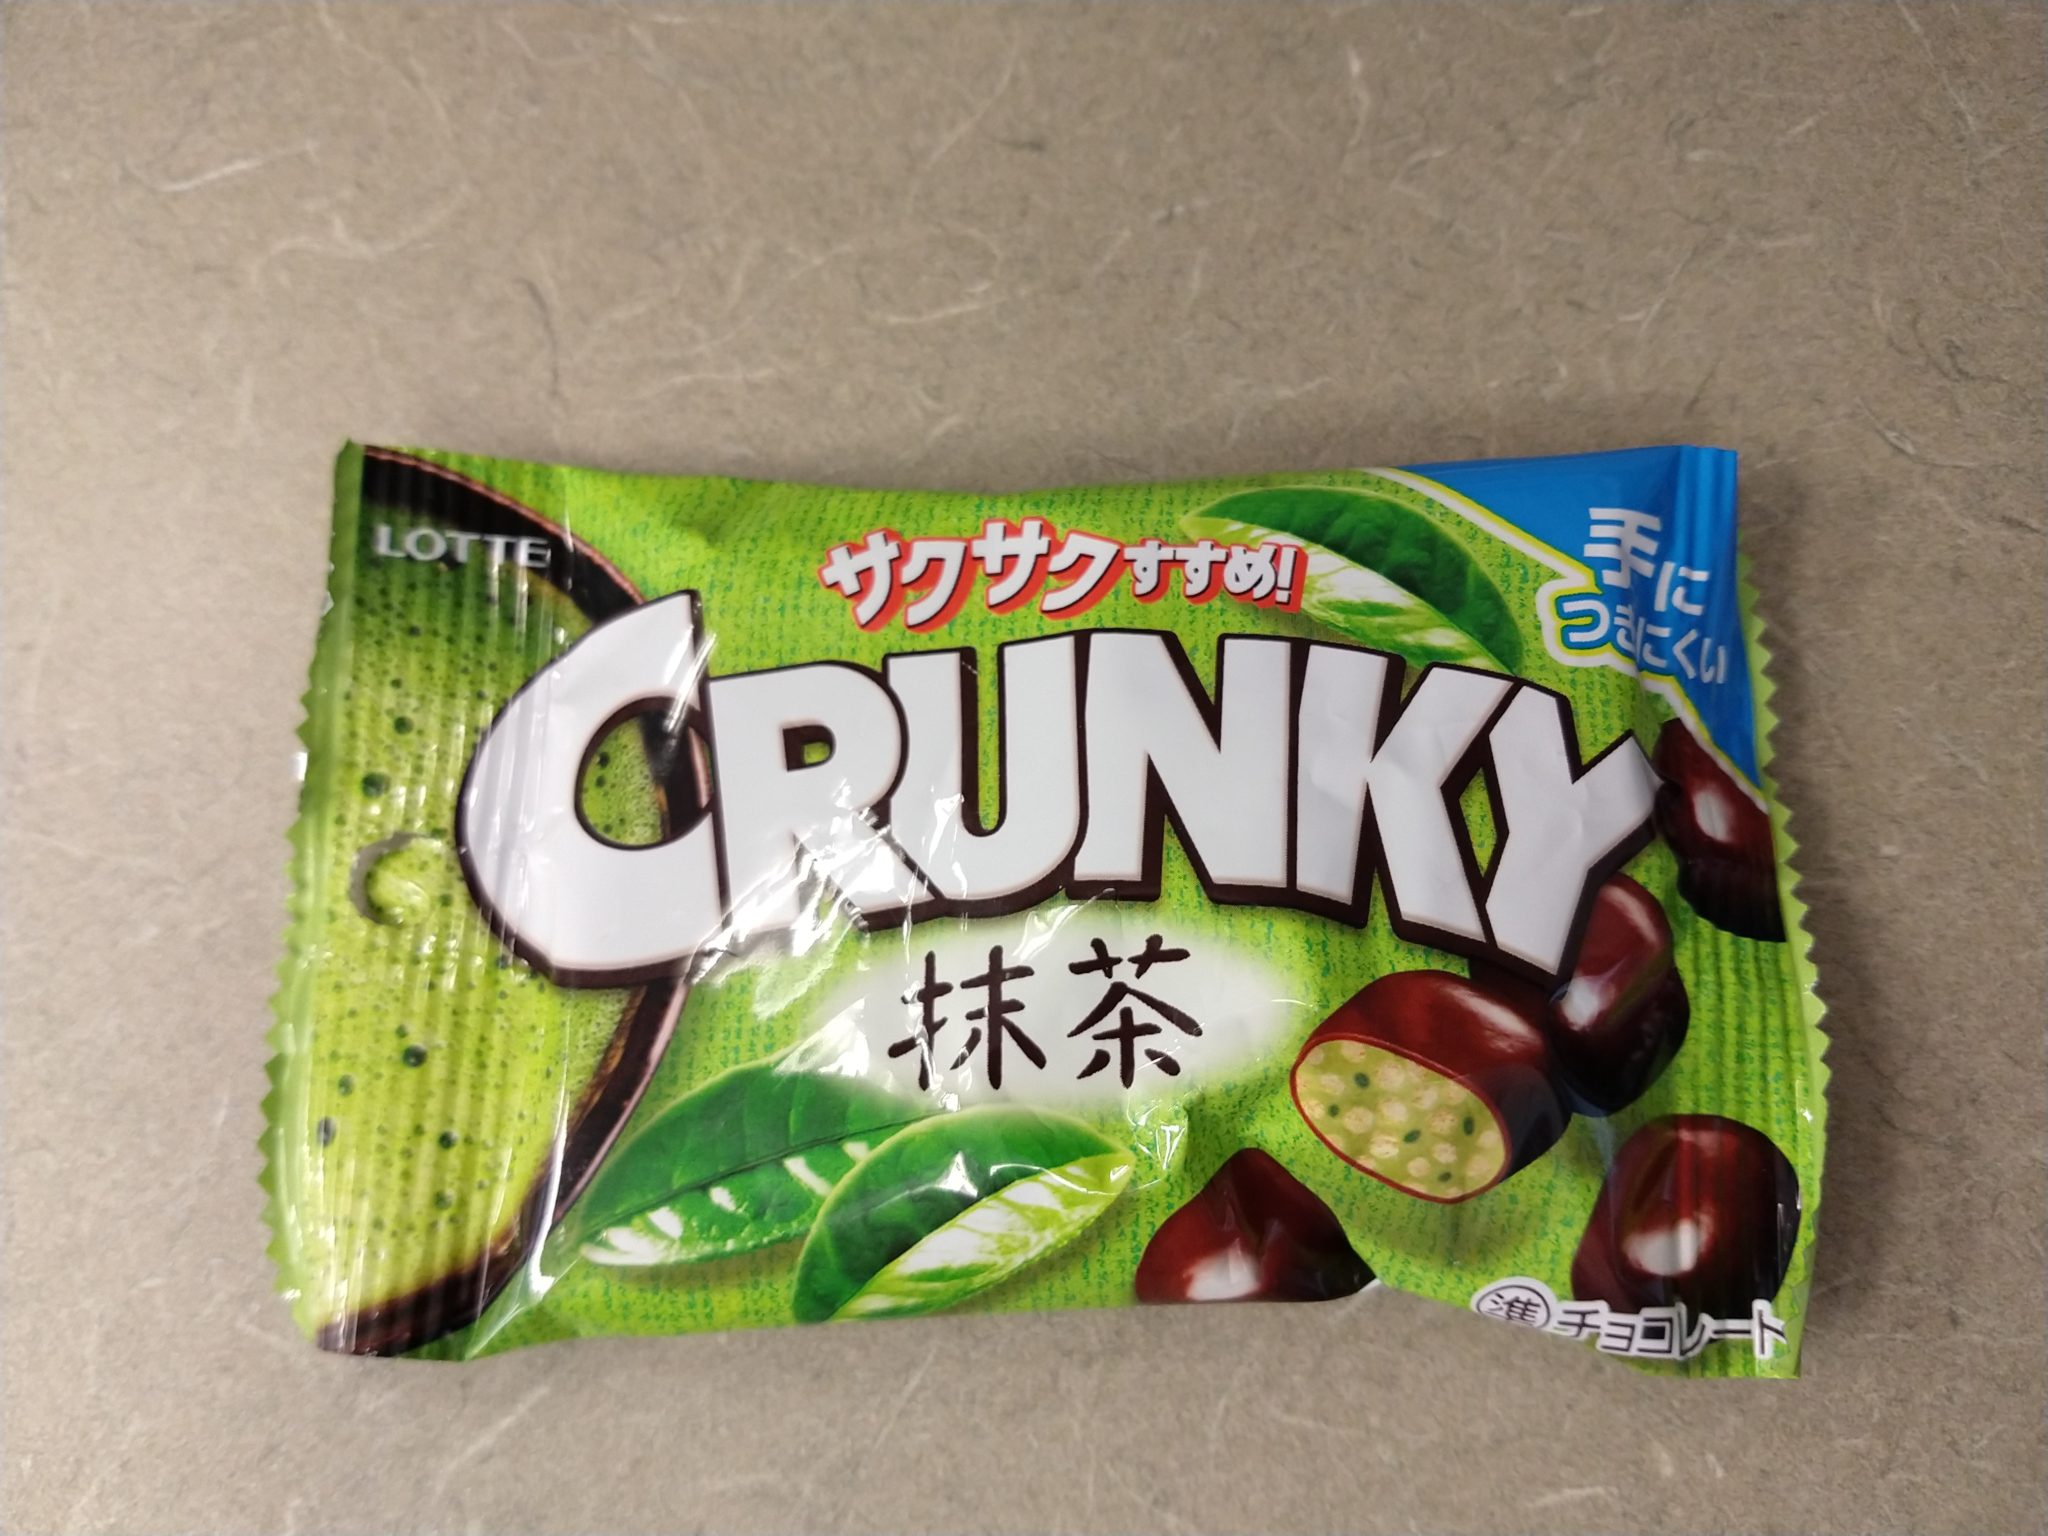 Crunky Balls – Matcha Chocolate